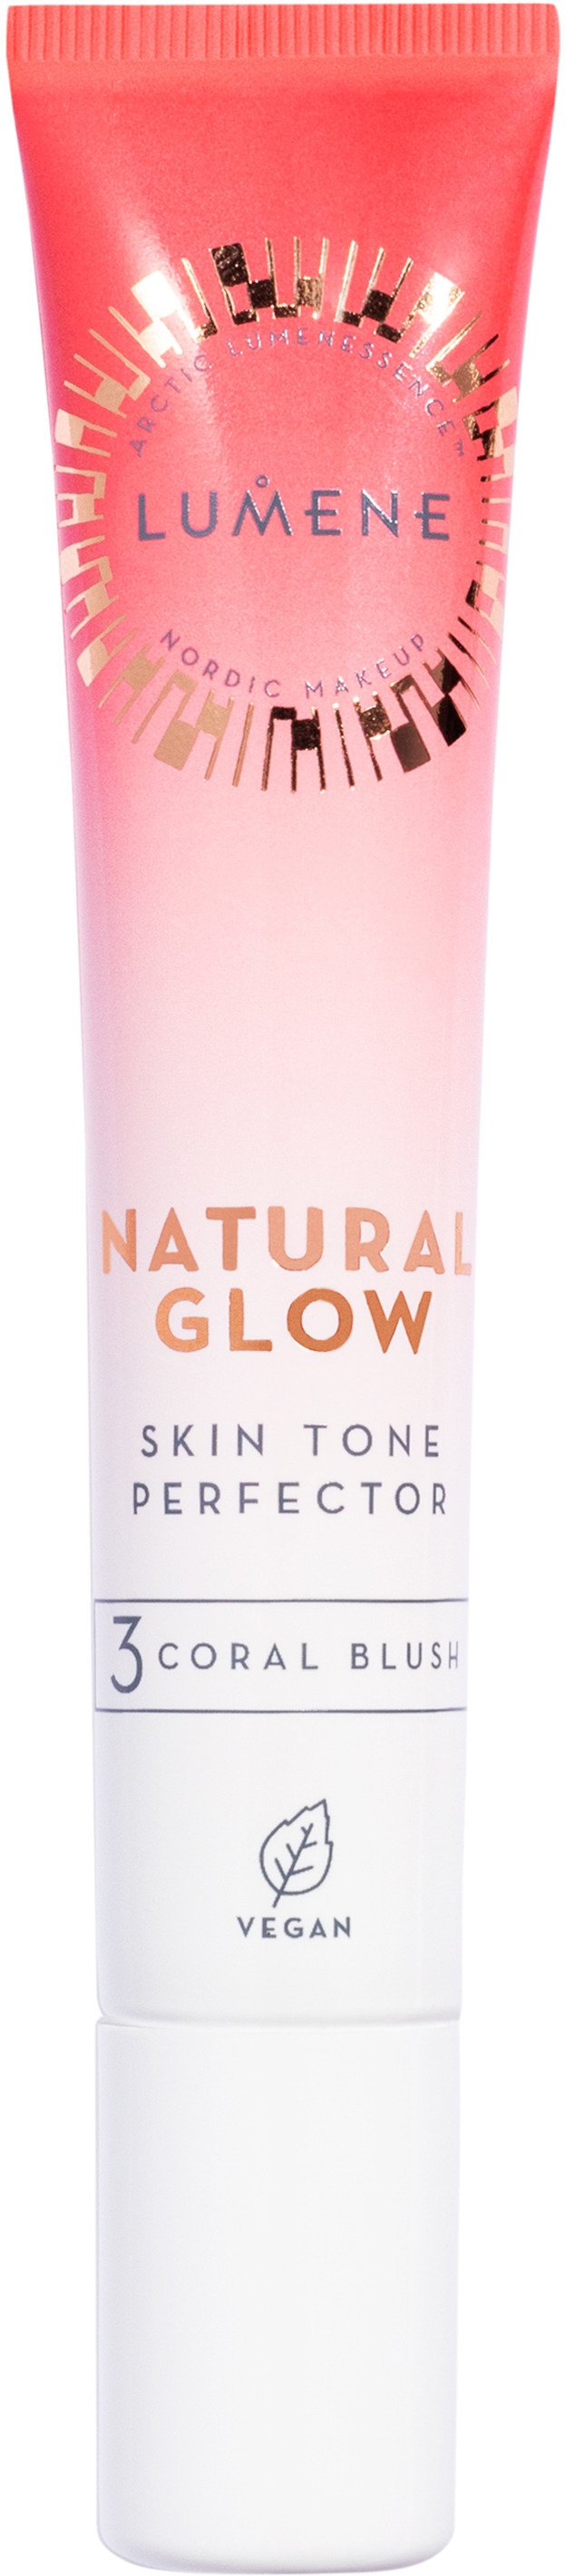 Lumene Natural Glow Skin Tone Perfector 3 Coral Blush 20 ml